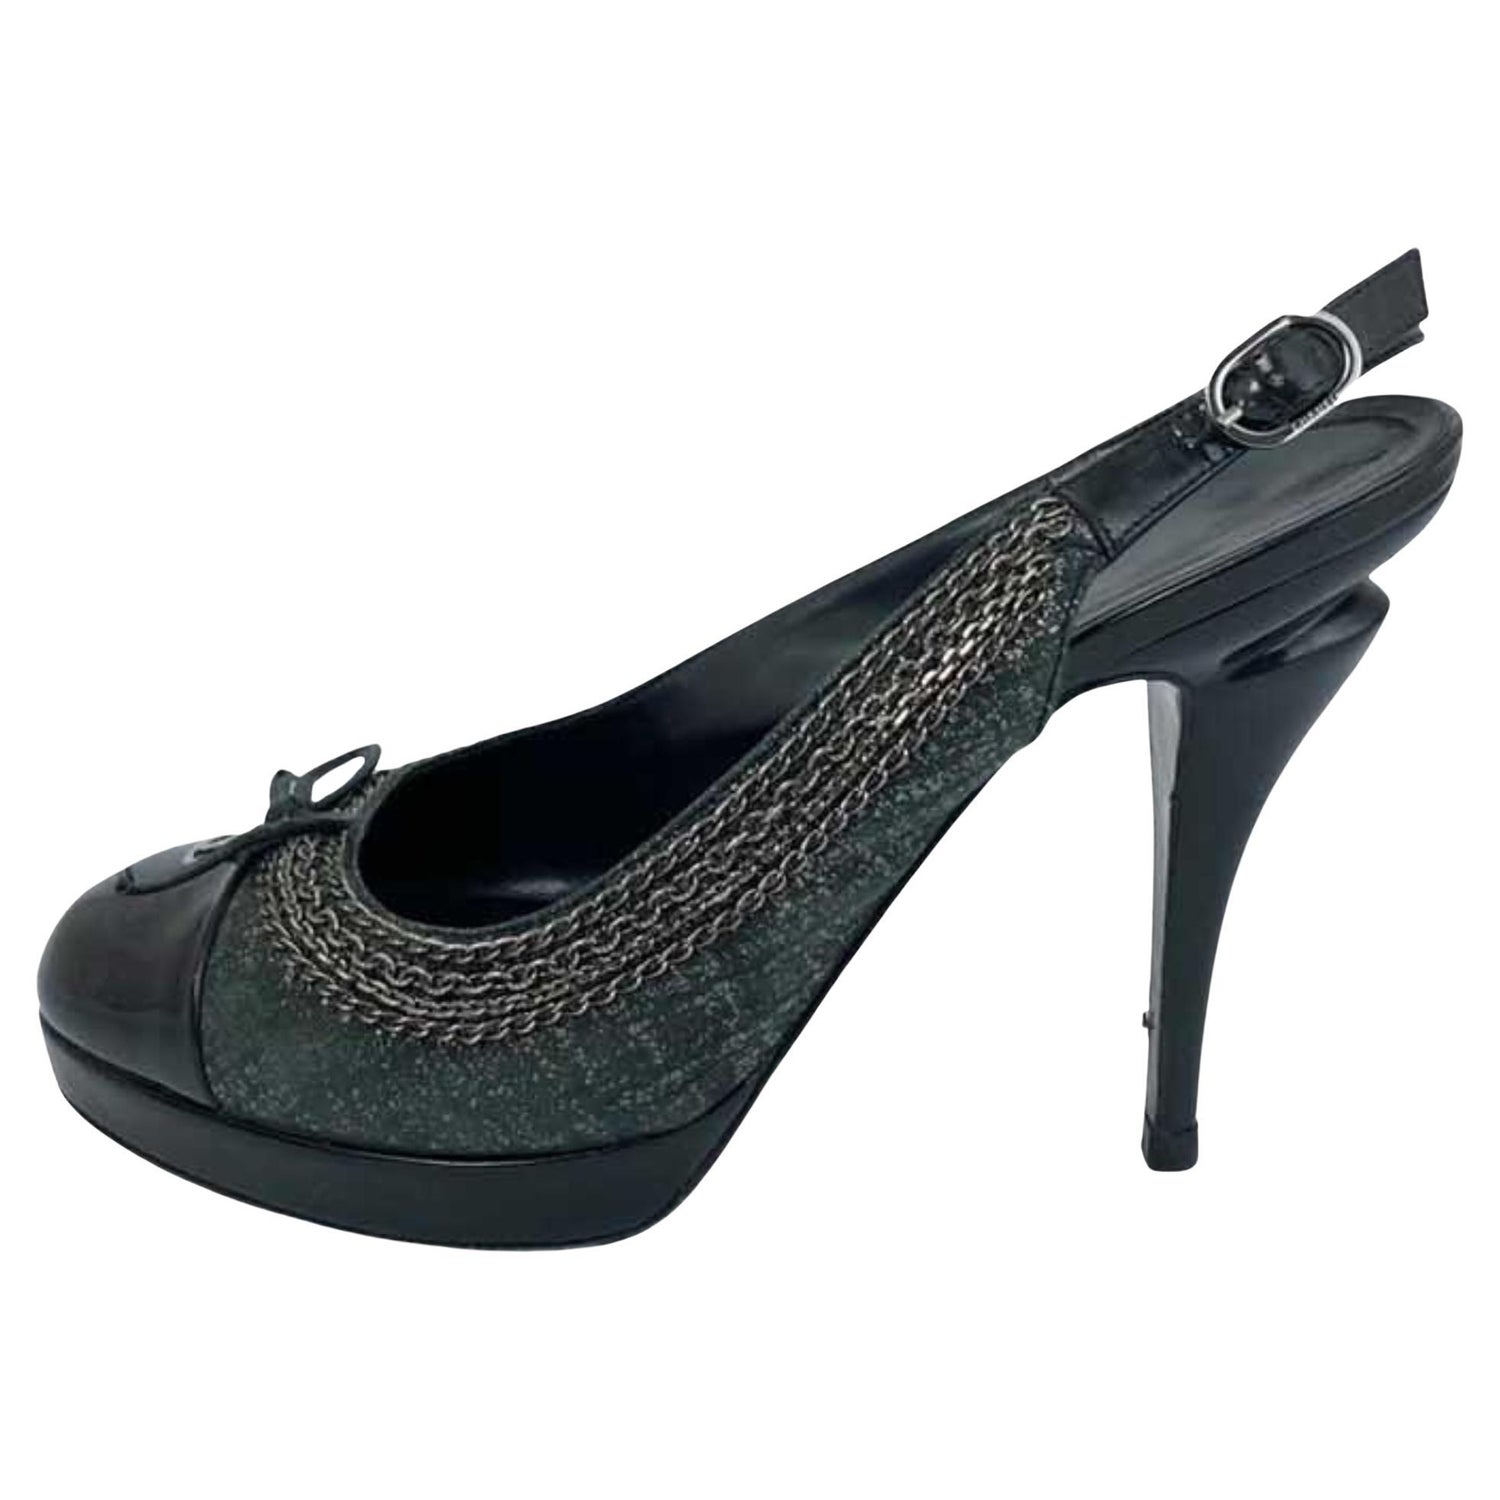 Chanel Lambskin Bow Sling Back Sandals - Size 9 C / 39 C - FINAL